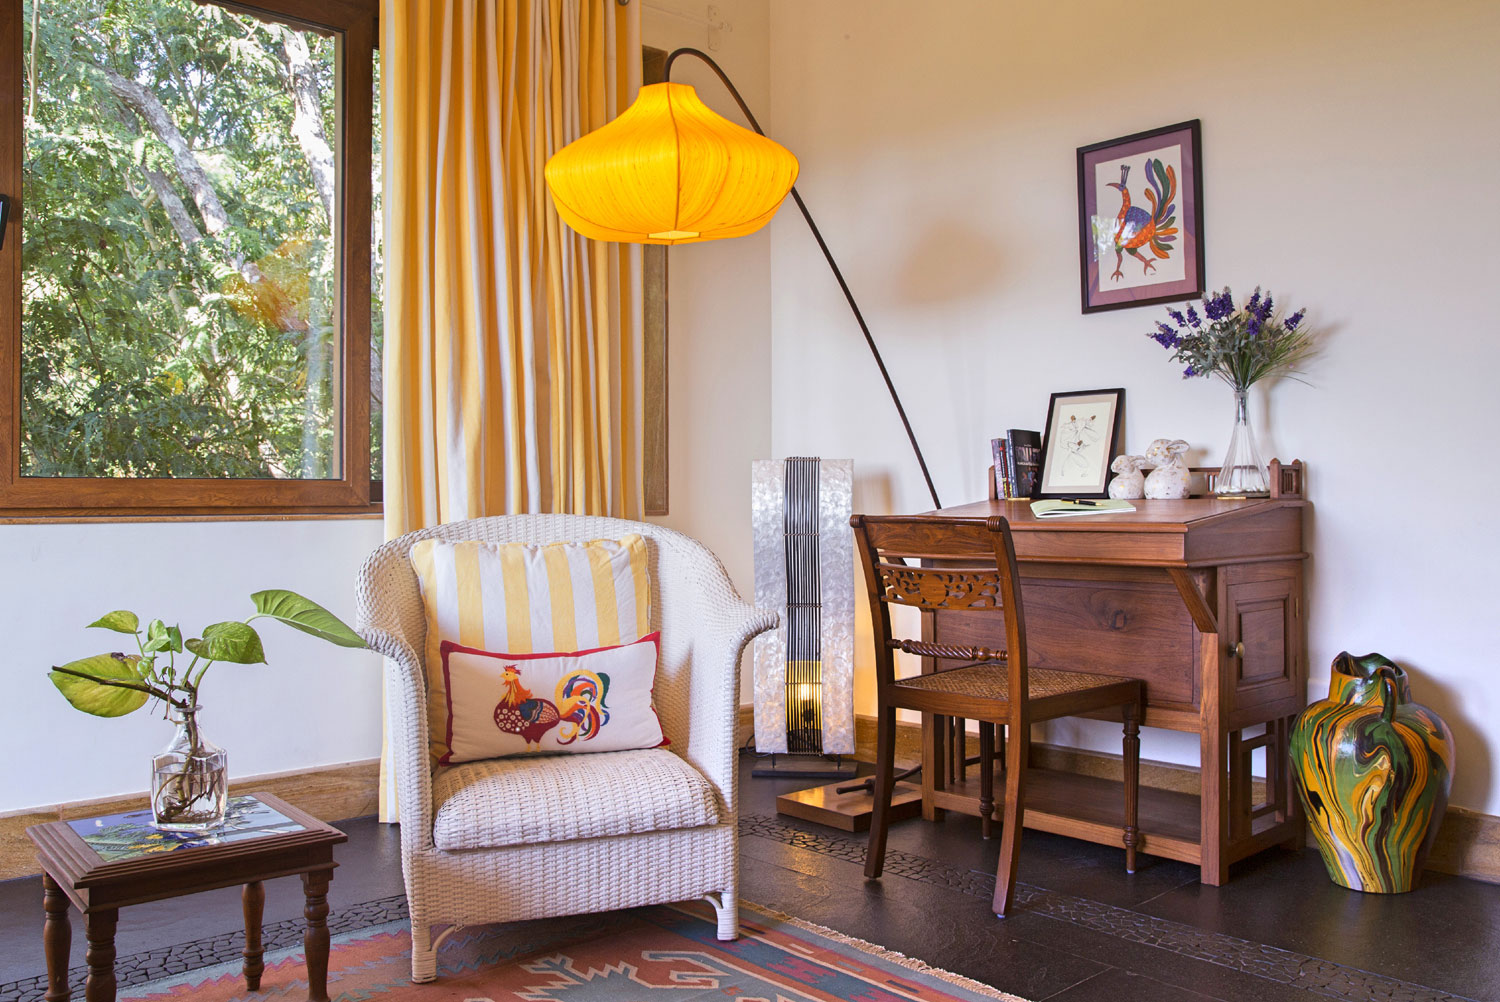 Lighting ideas for a rental living room interior design - Beautiful Homes